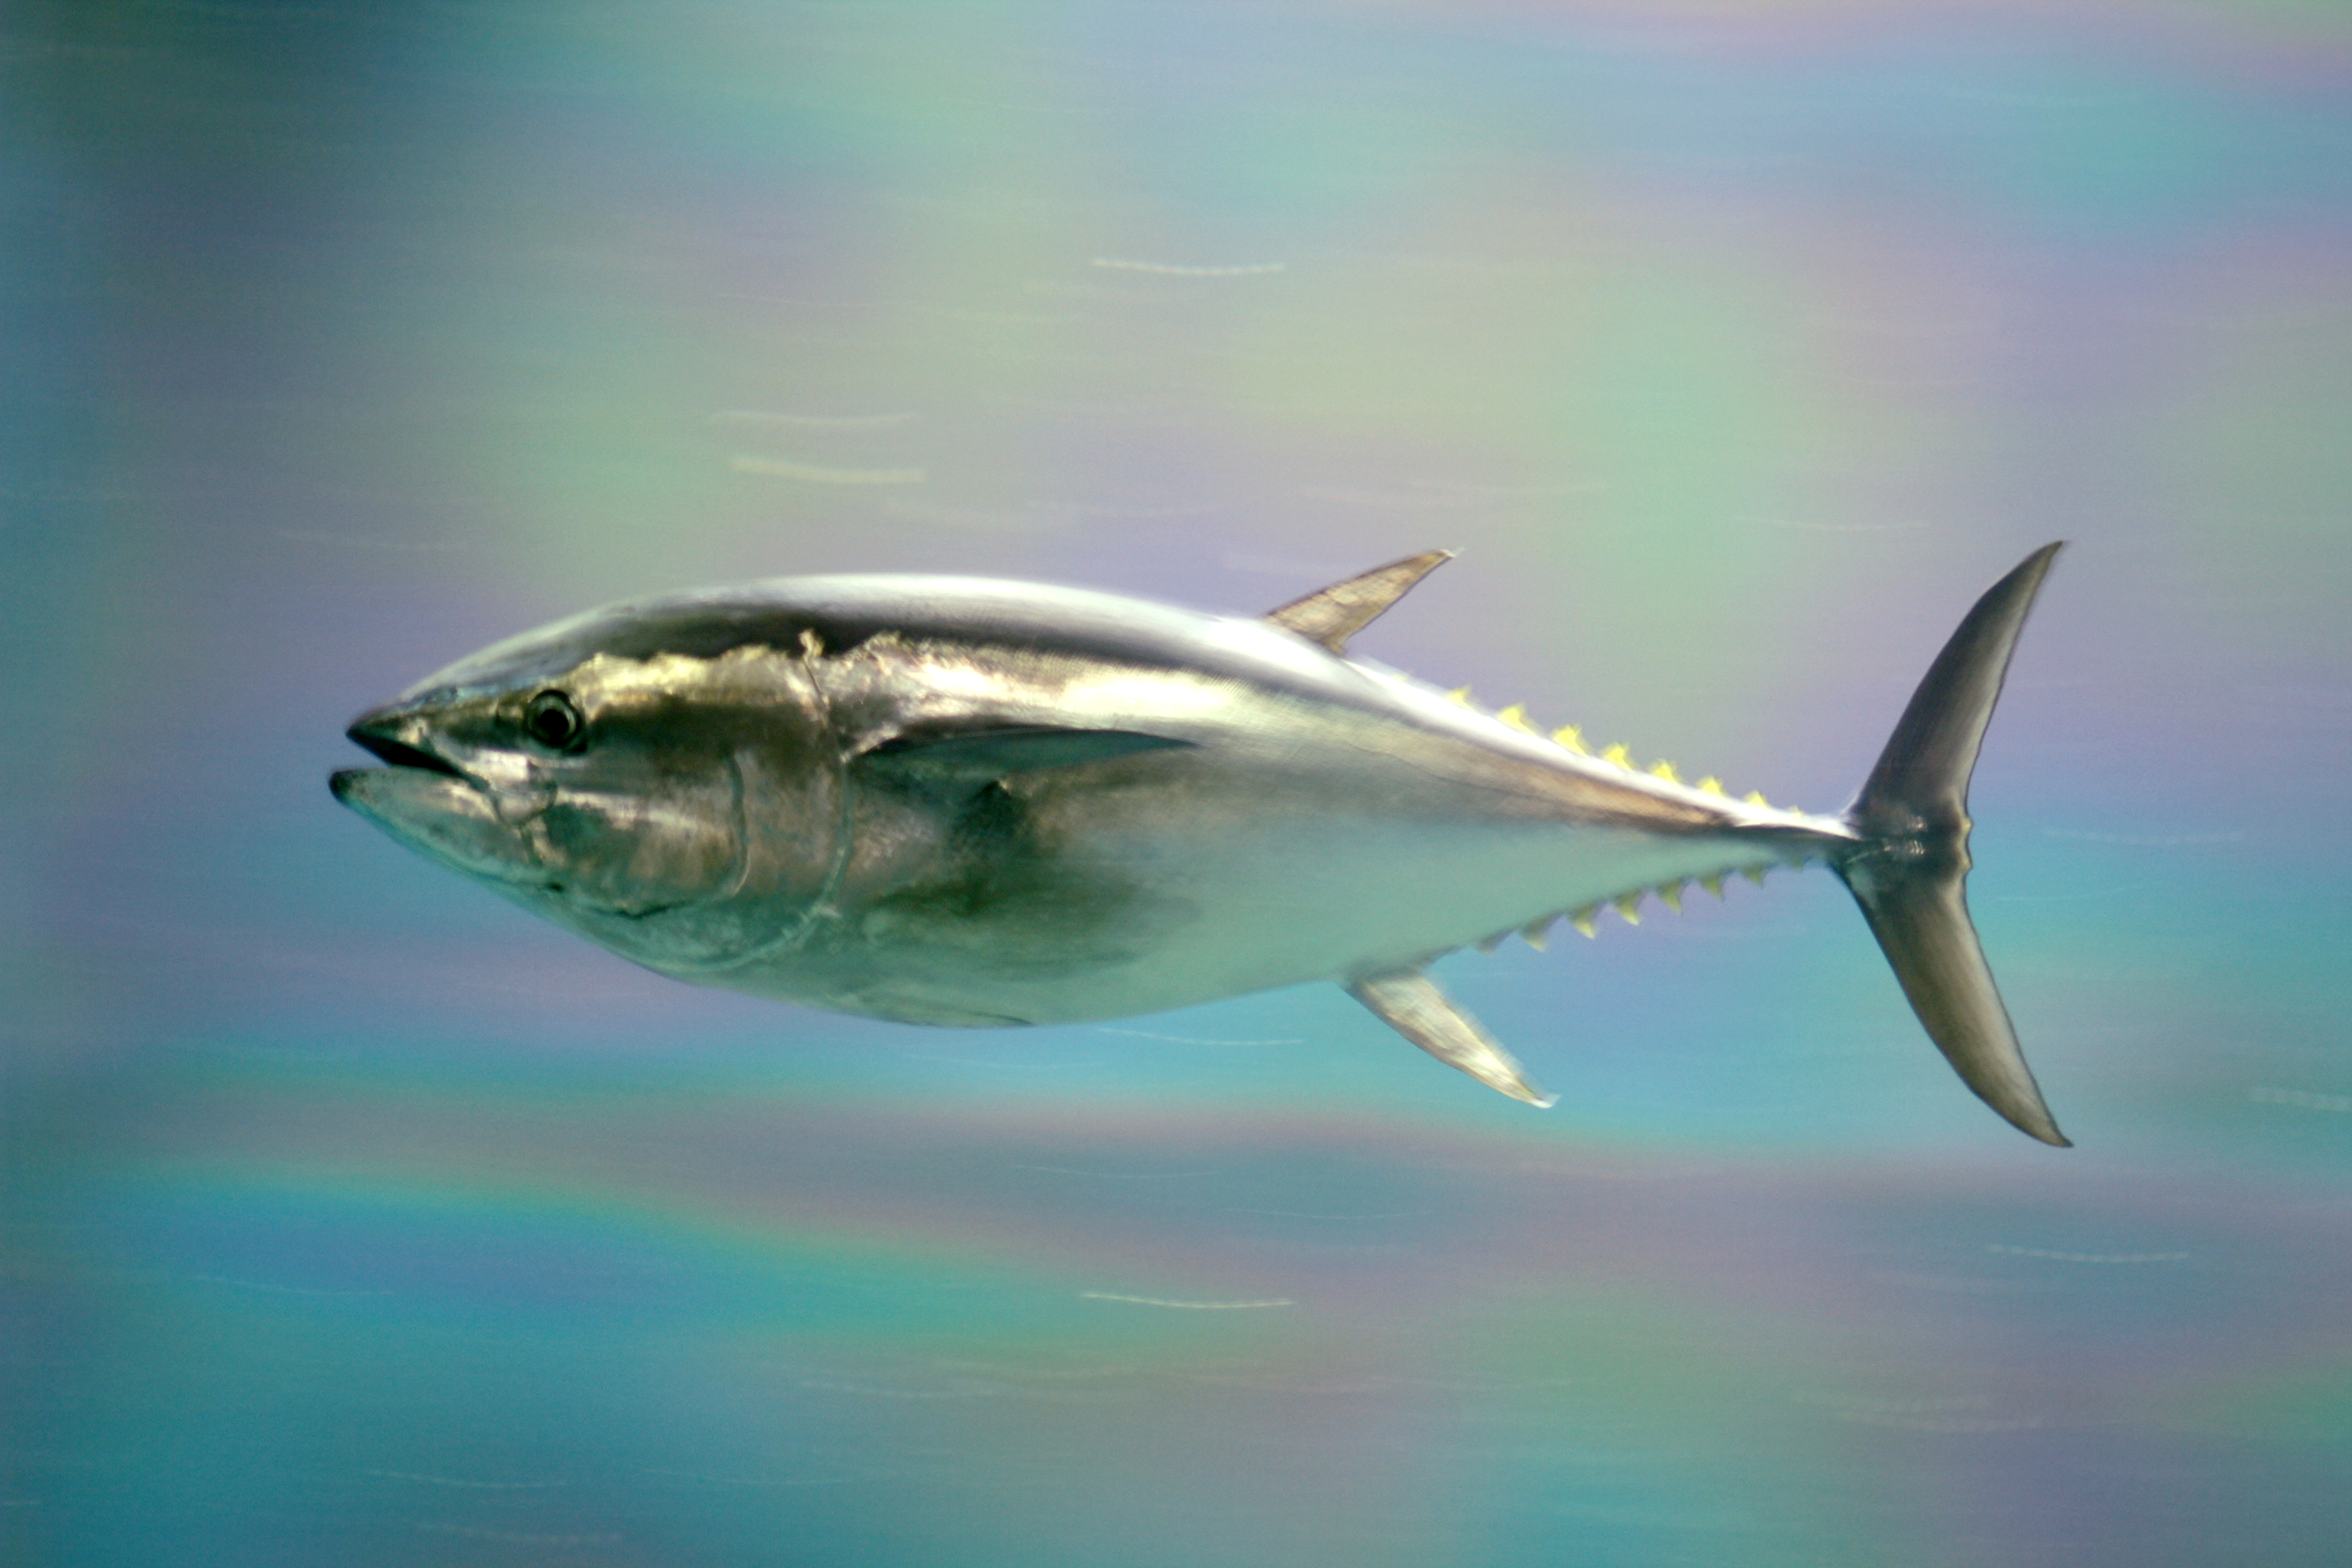 https://upload.wikimedia.org/wikipedia/commons/7/73/Pacific_bluefin_tuna.jpg